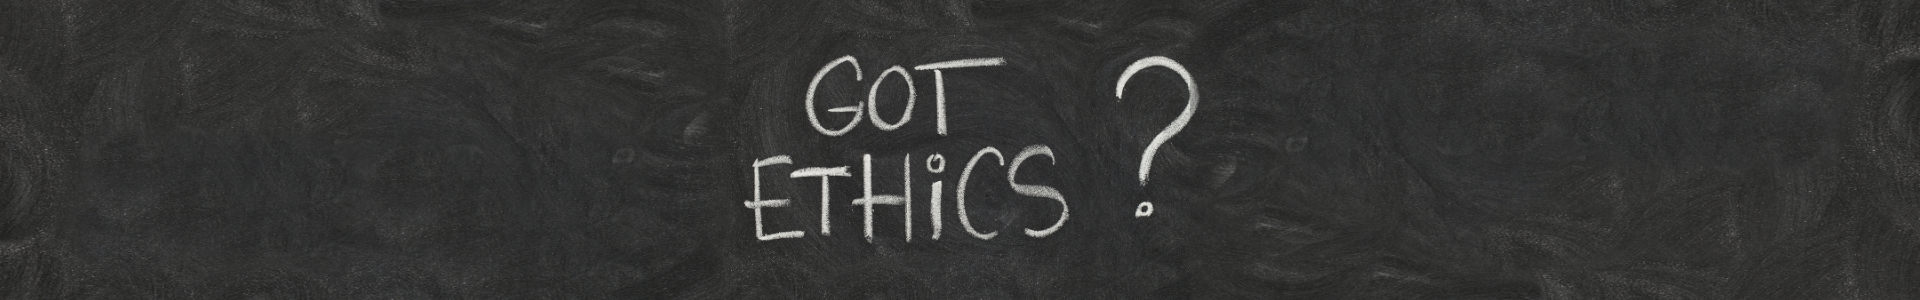 Got Ethics?